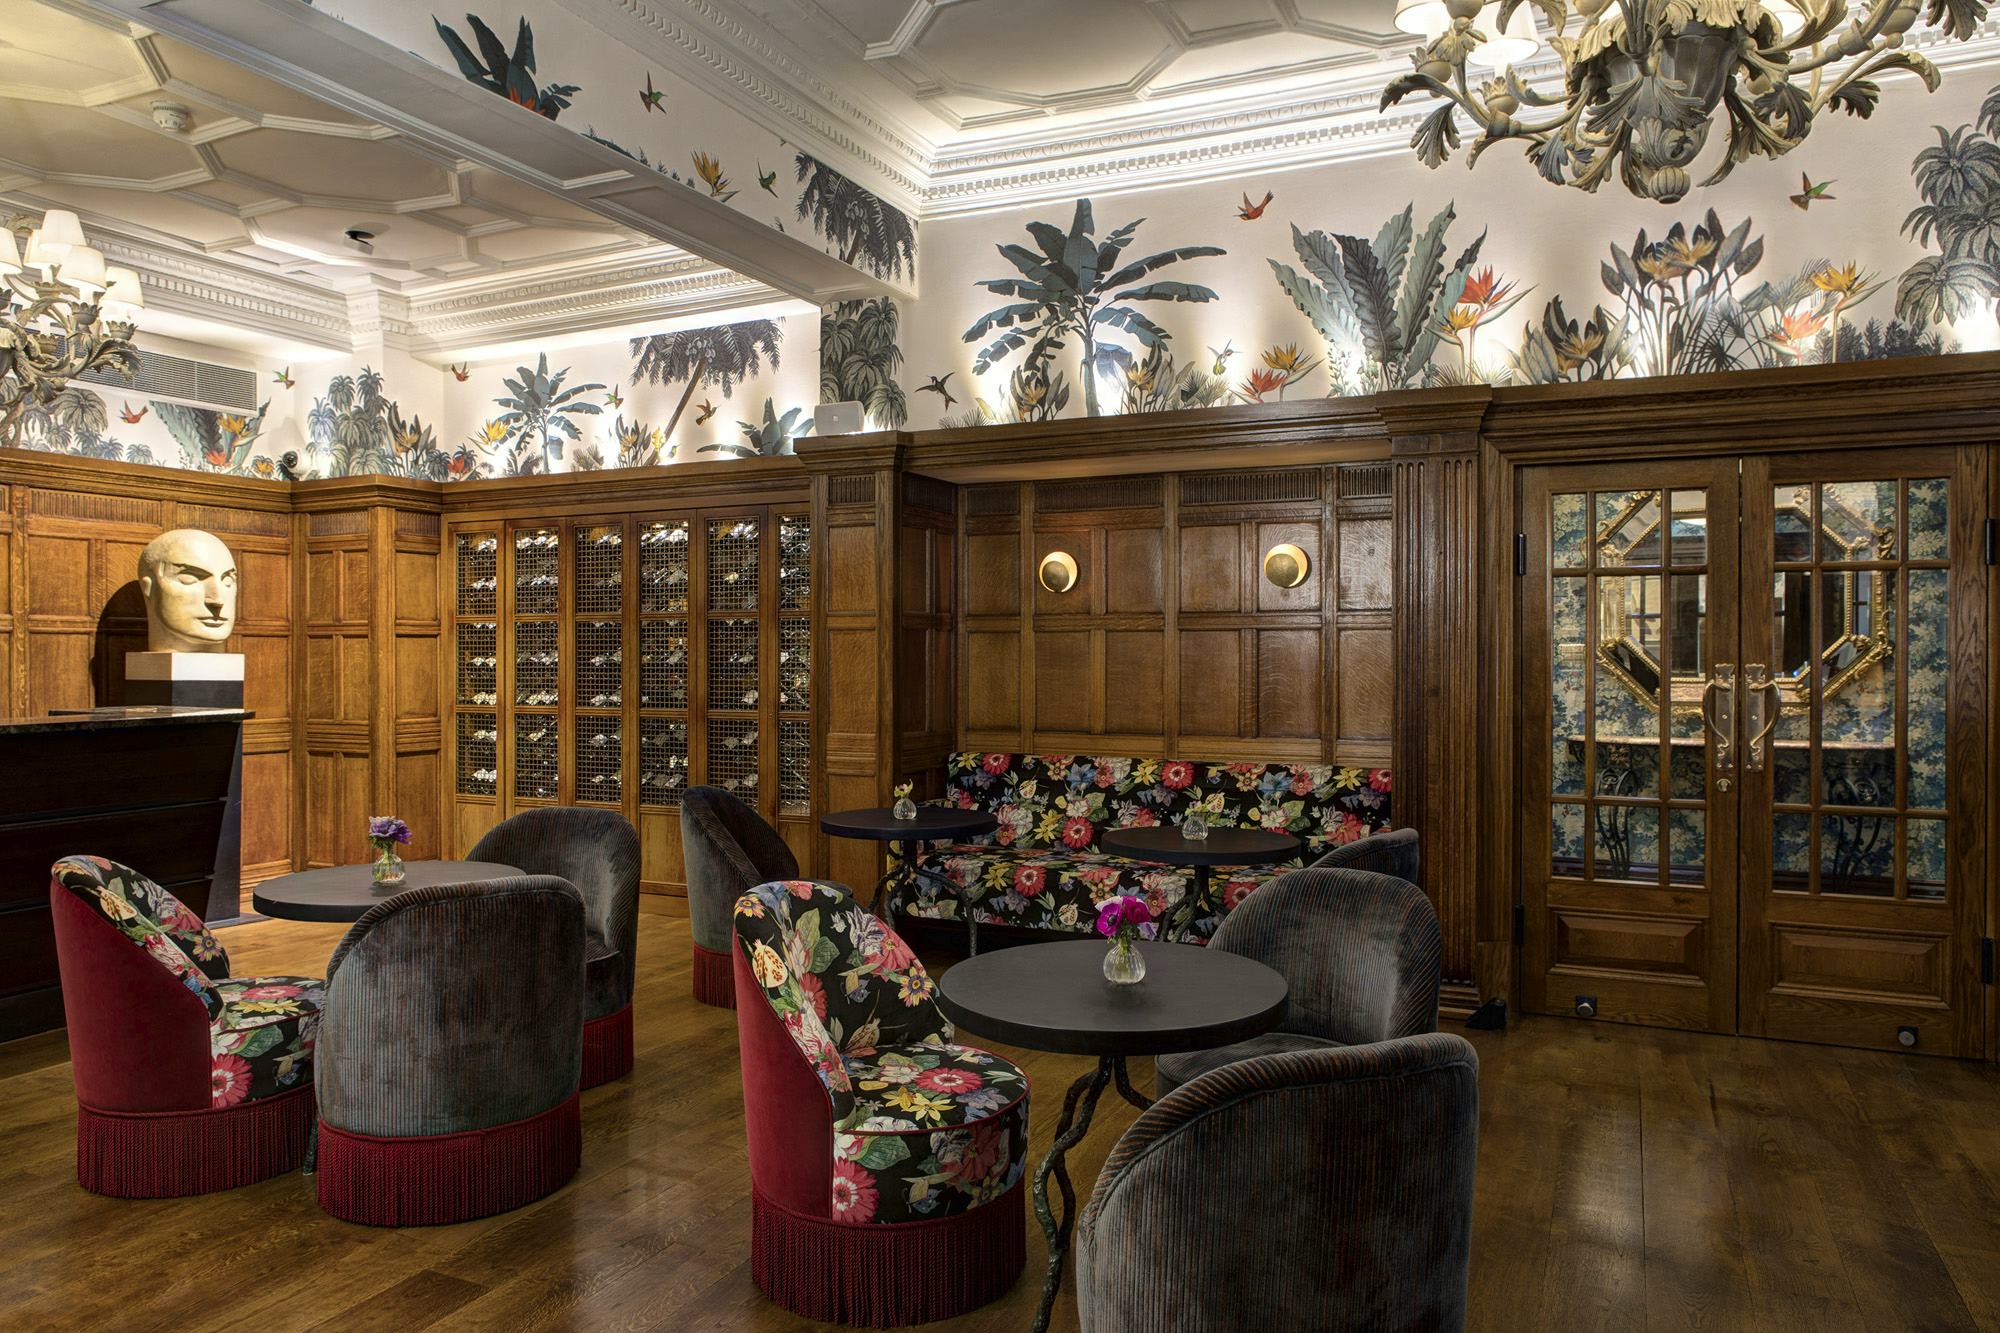 Heinz Beck Brown's Hotel london mayfair hotels restaurants fine dining italian michelin star tables arty designer interiors